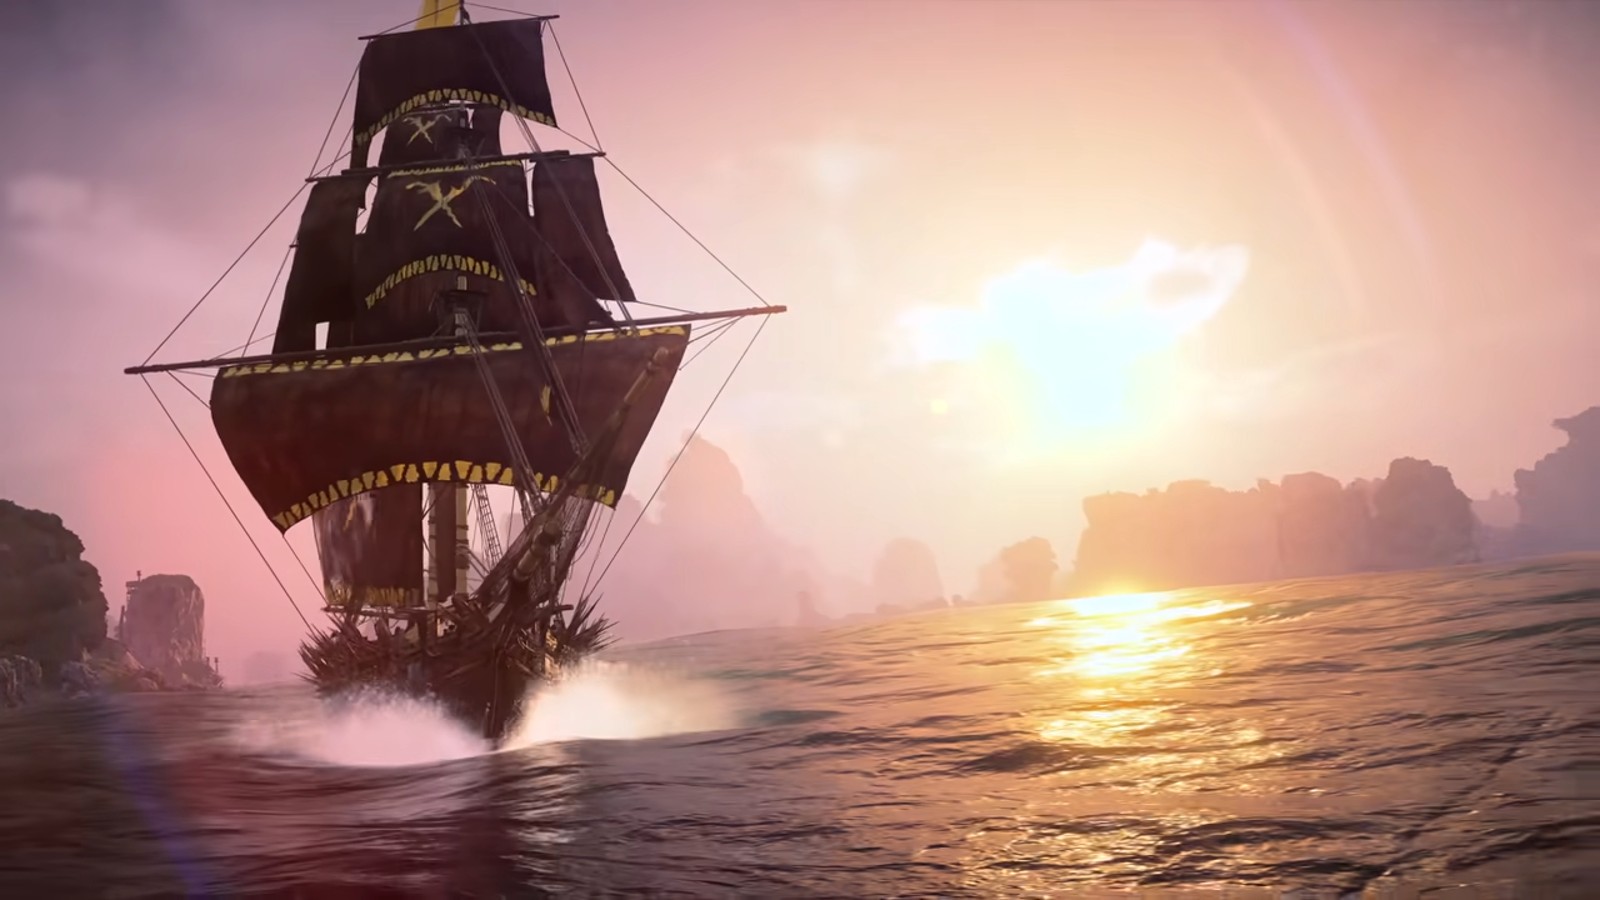 Ubisoft pirate adventure Skull and Bones delayed again, now due